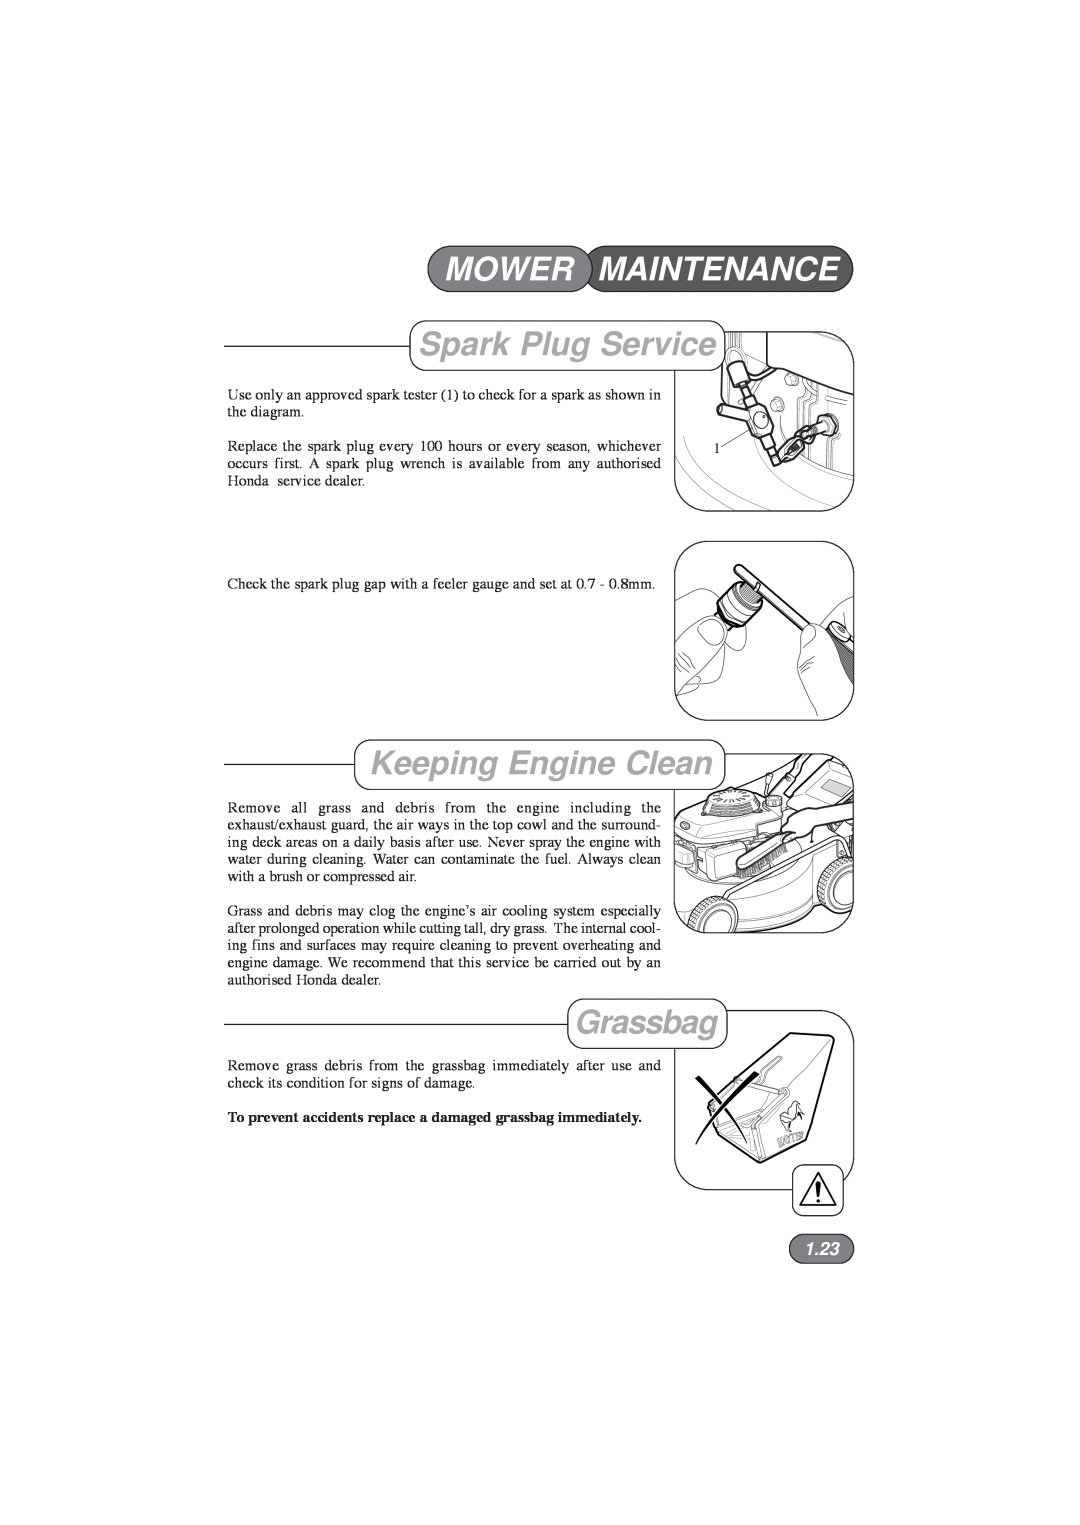 Hayter Mowers 432D, 435D, 434D, 433D manual Spark Plug Service, Keeping Engine Clean, 1.23, Mower Maintenance, Grassbag 